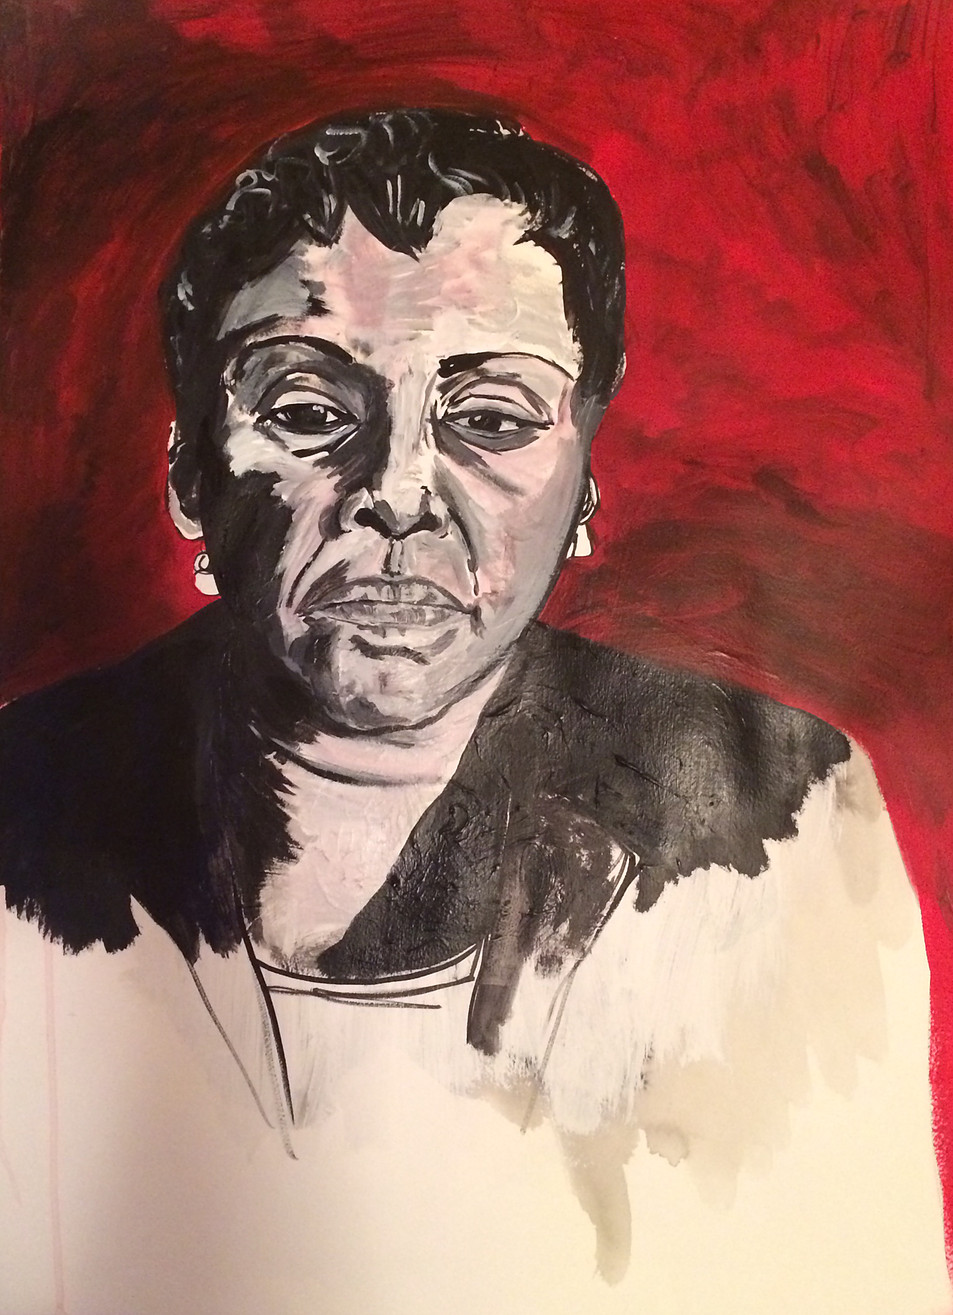 Valerie Bell portrait. All artwork via Alyssa Liles-Amponsah's "American Moms" exhibit.